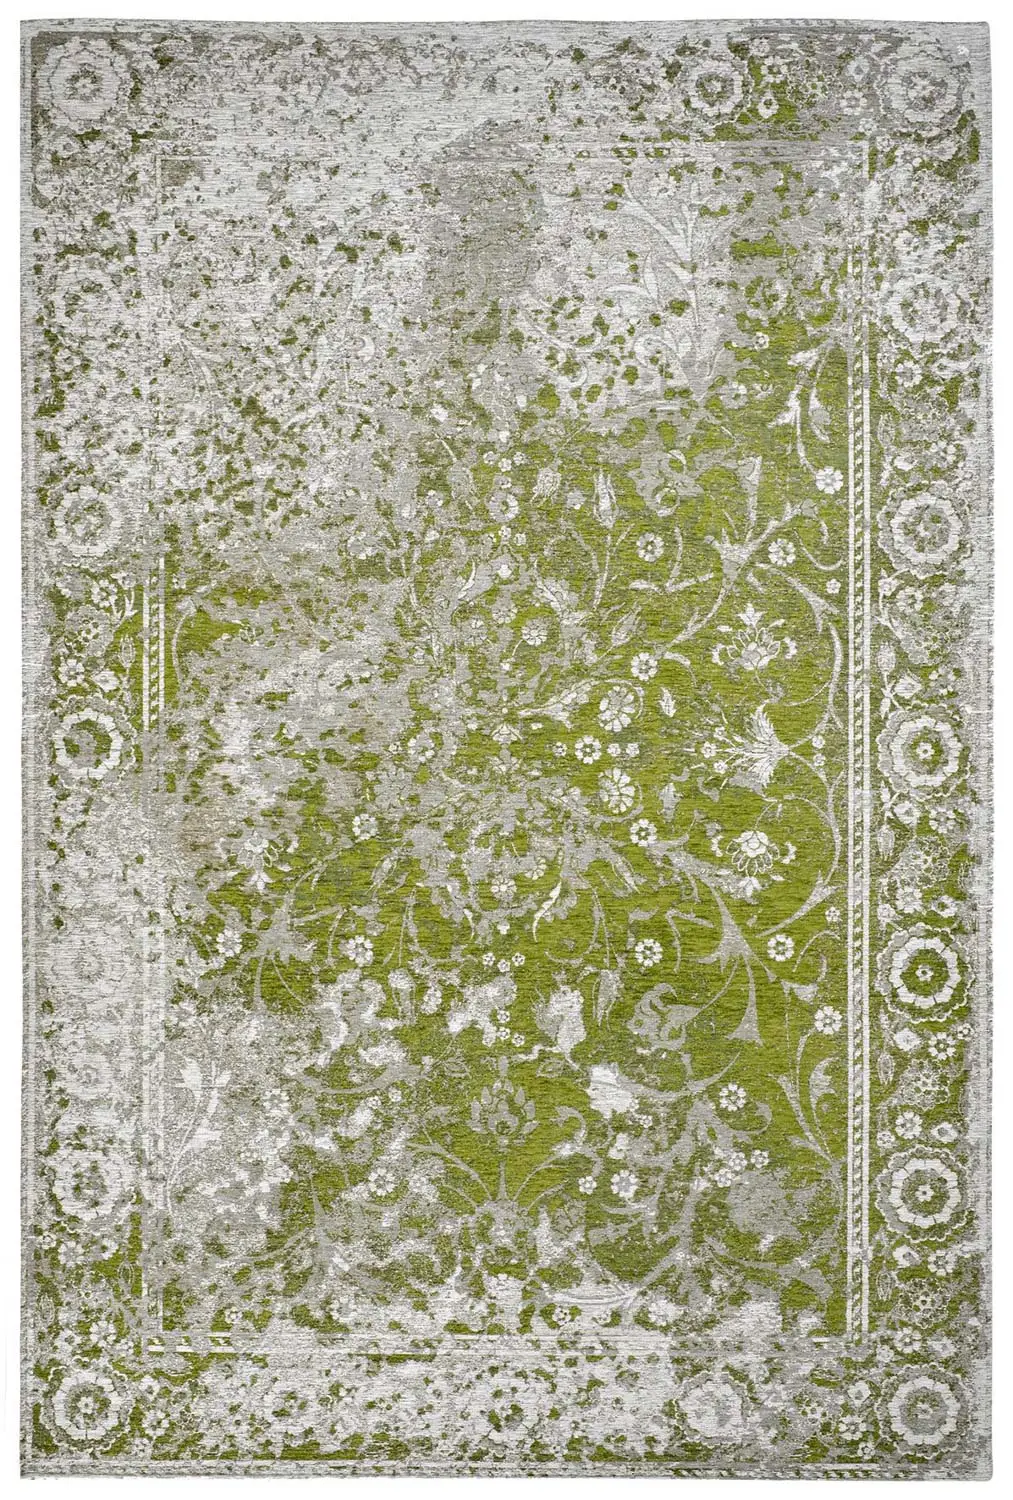 Vintage Teppich - Cesare - rechteckig